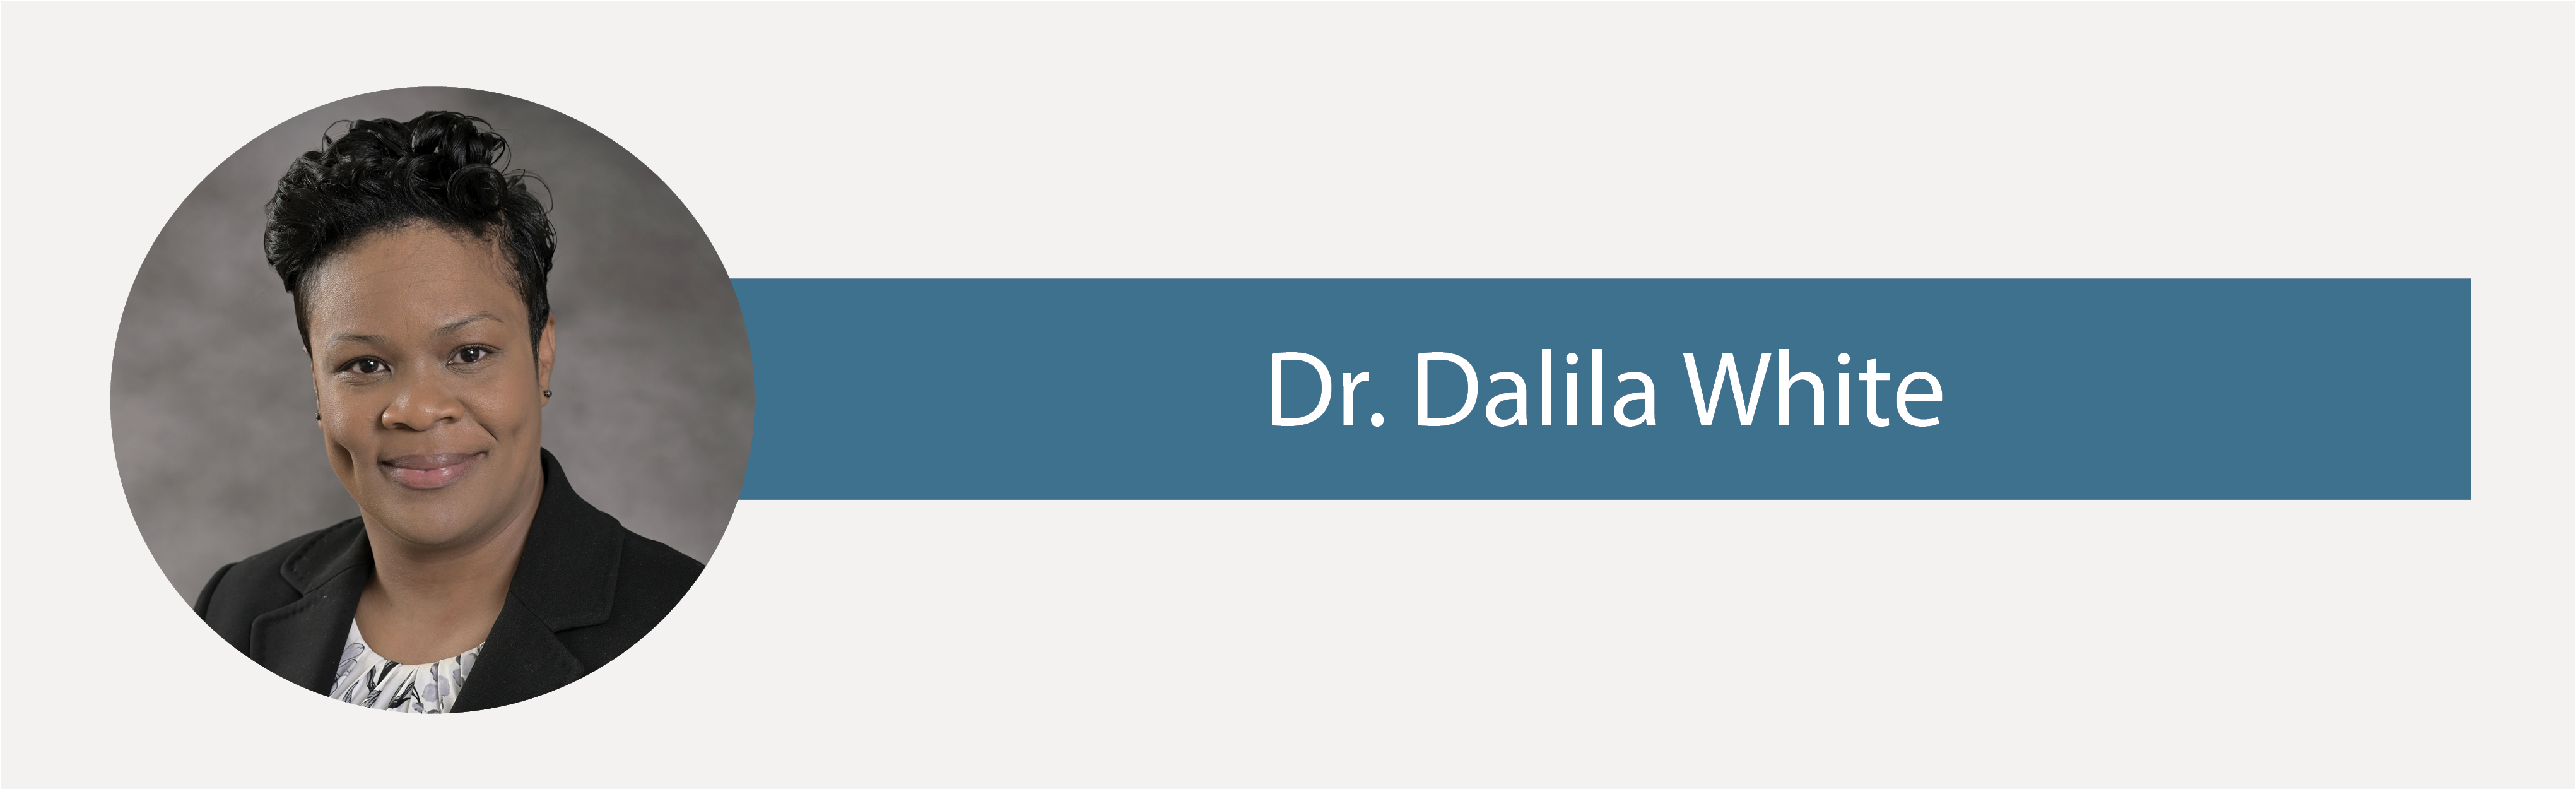 White Plains Hospital Welcomes Vascular Surgeon Dr. Dalila White